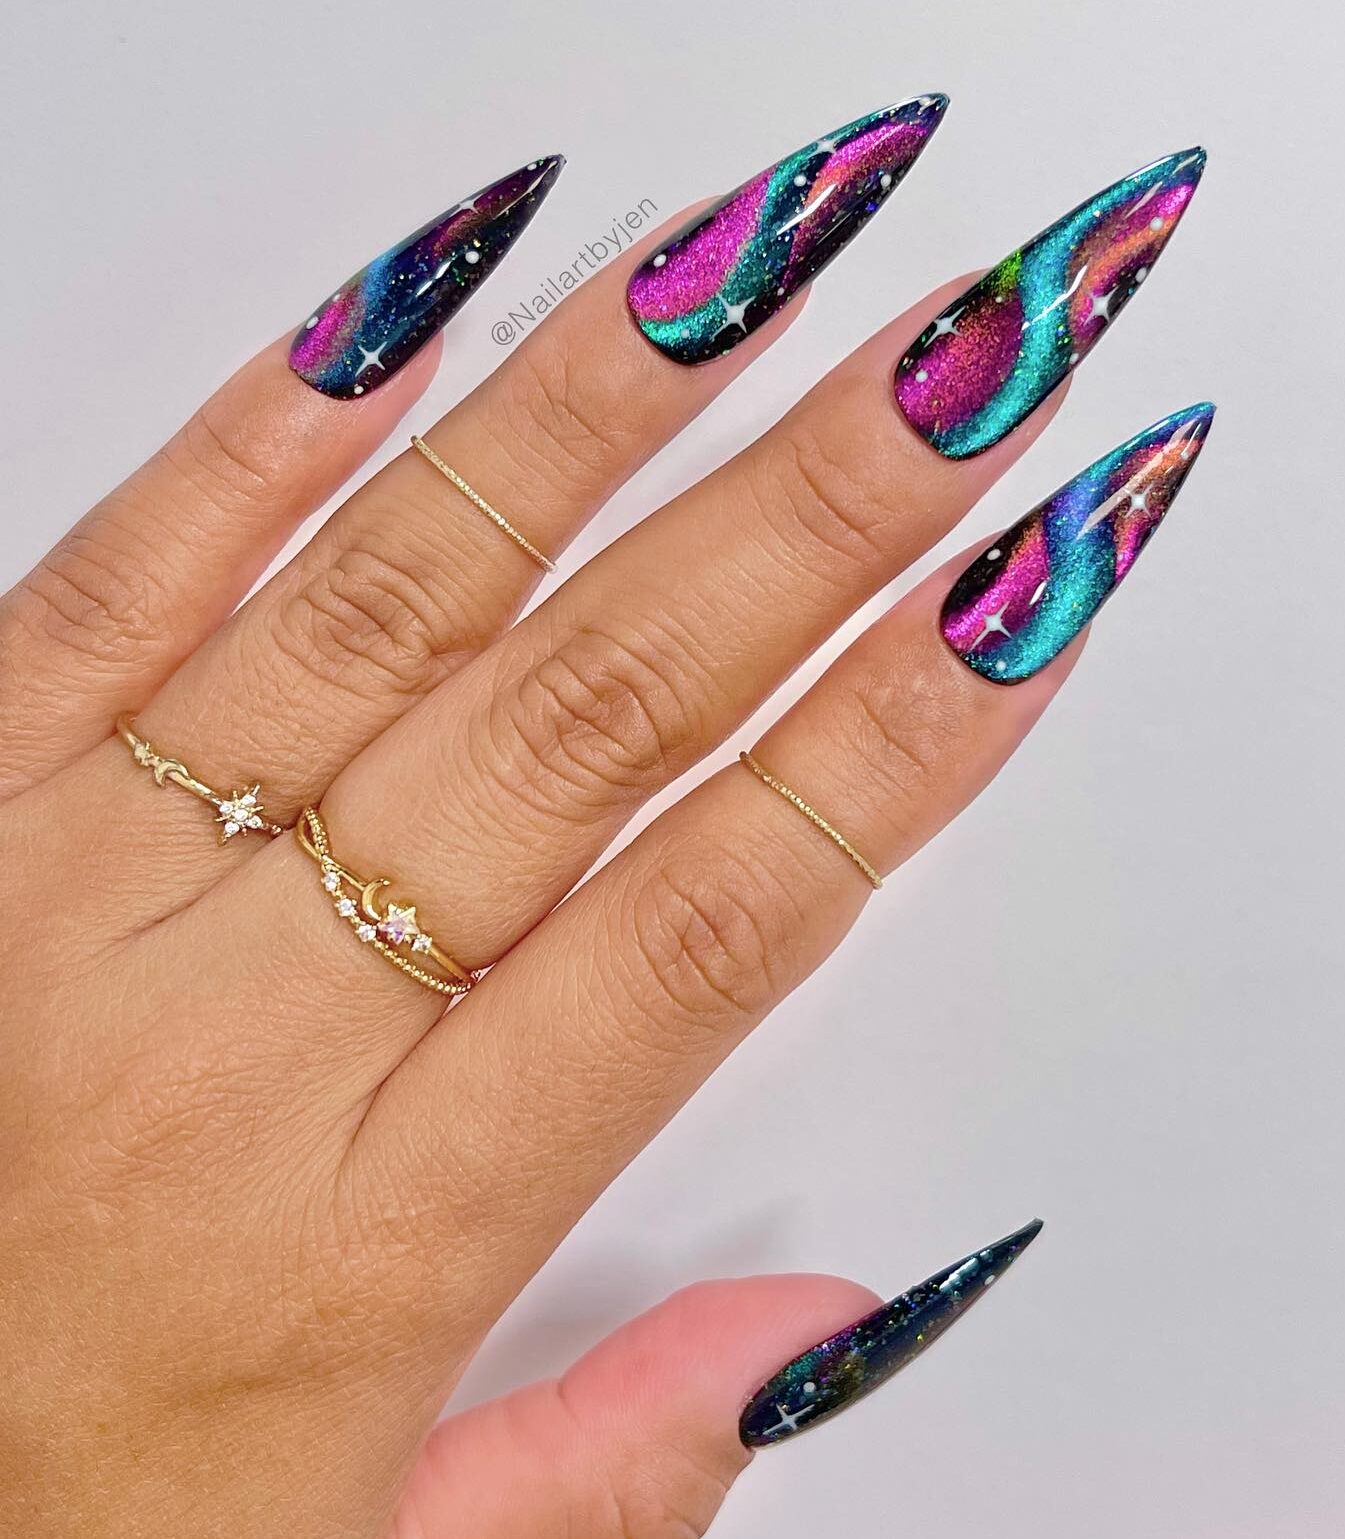 Metallic purple and blue galaxy-inspired swirls on long stiletto nails